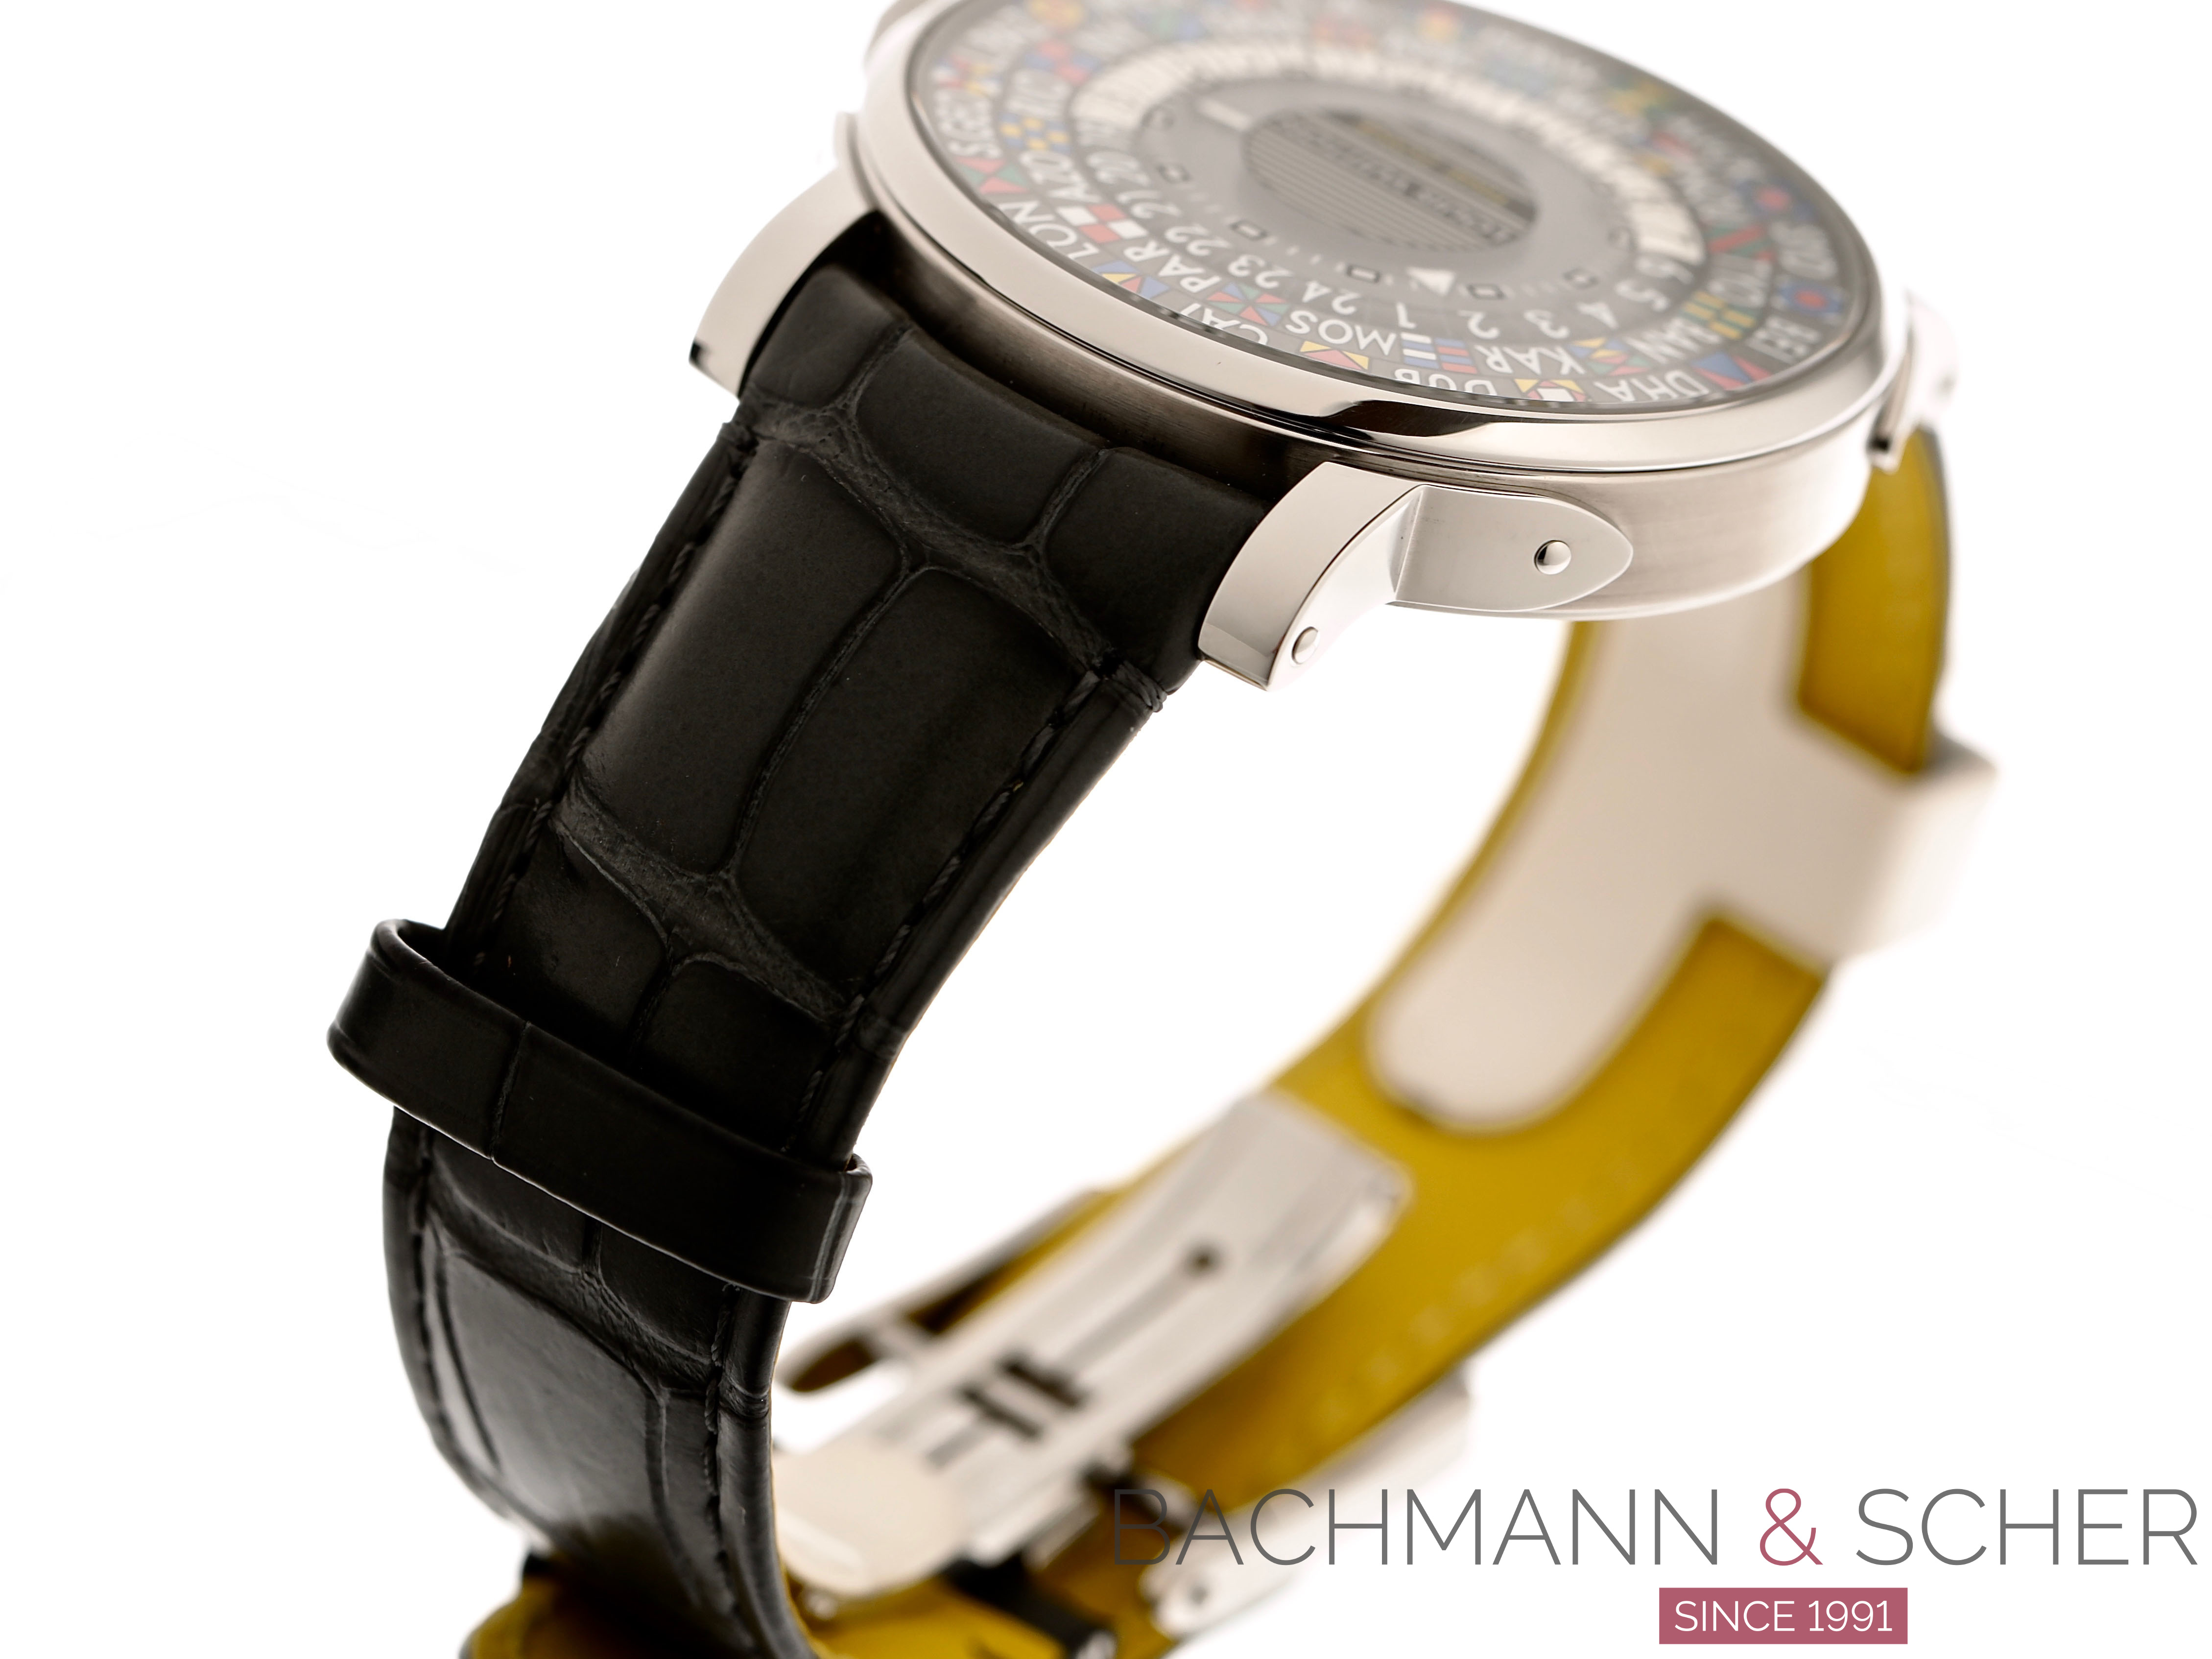 Louis Vuitton Escale Time Zone Spacecraft Watch